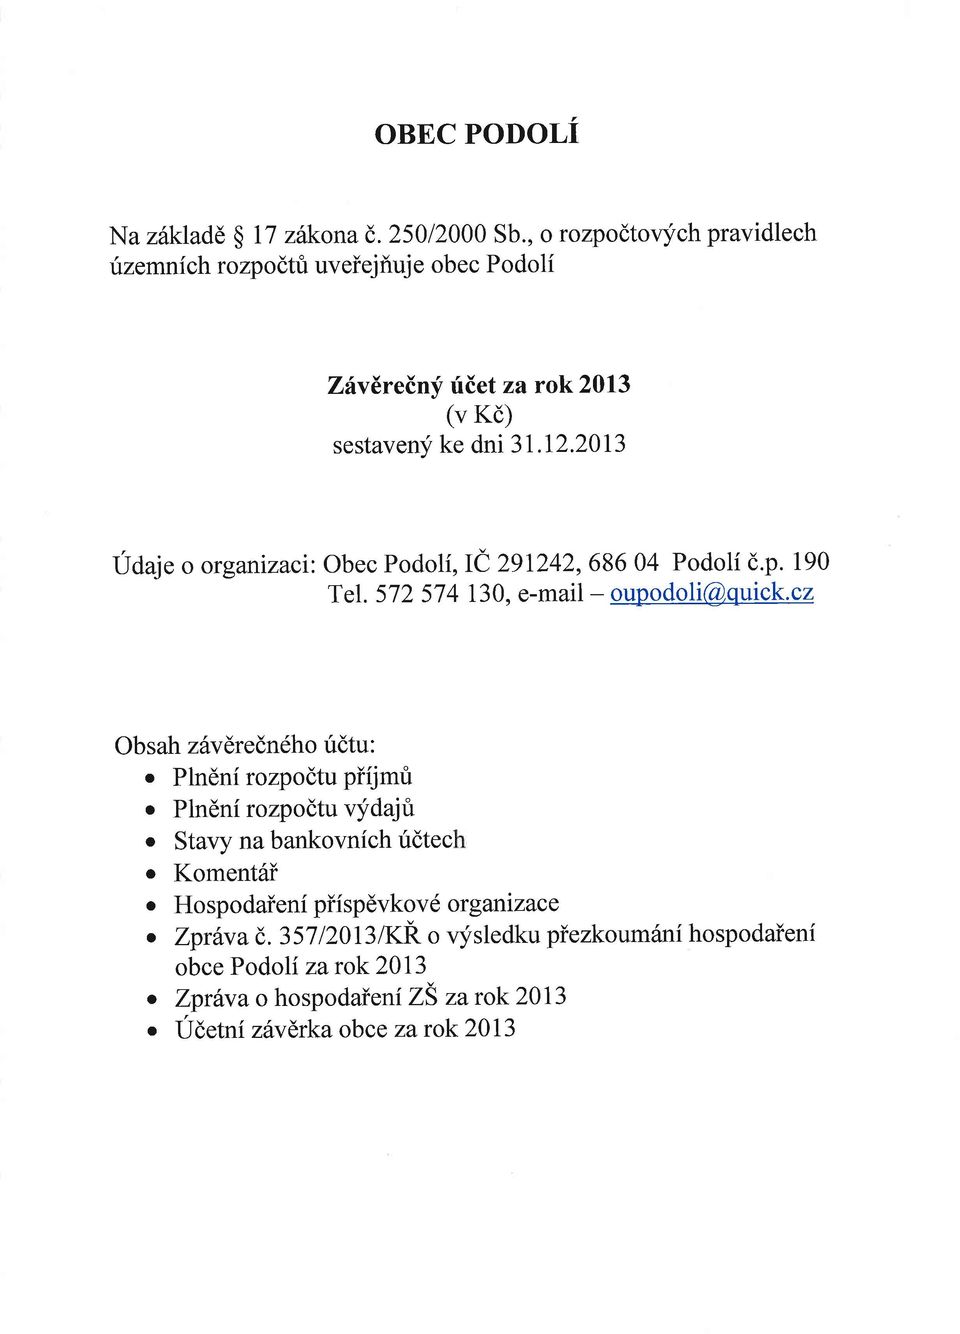 2013 Udaje o organizaci: Obec Podoli, IC 291242,686 04 Podoli d.p. 190 Tel. 572 574 I30, e-mail - oupodoli@quick.cz Obsah zhvdredndho ridtu:.